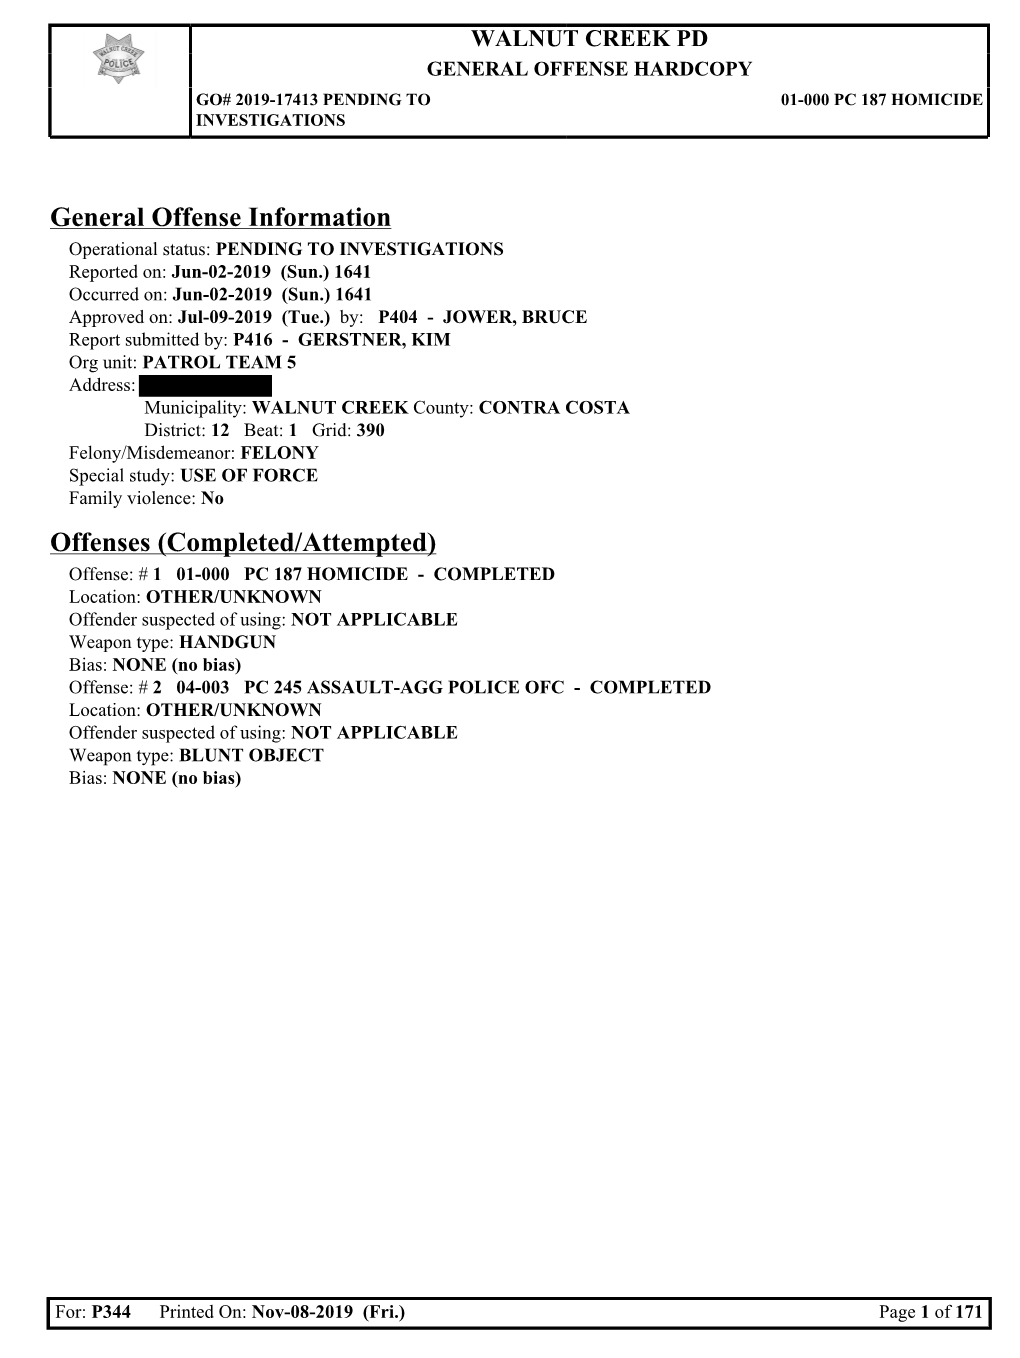 Walnut Creek Police Department Complete Investigative Report